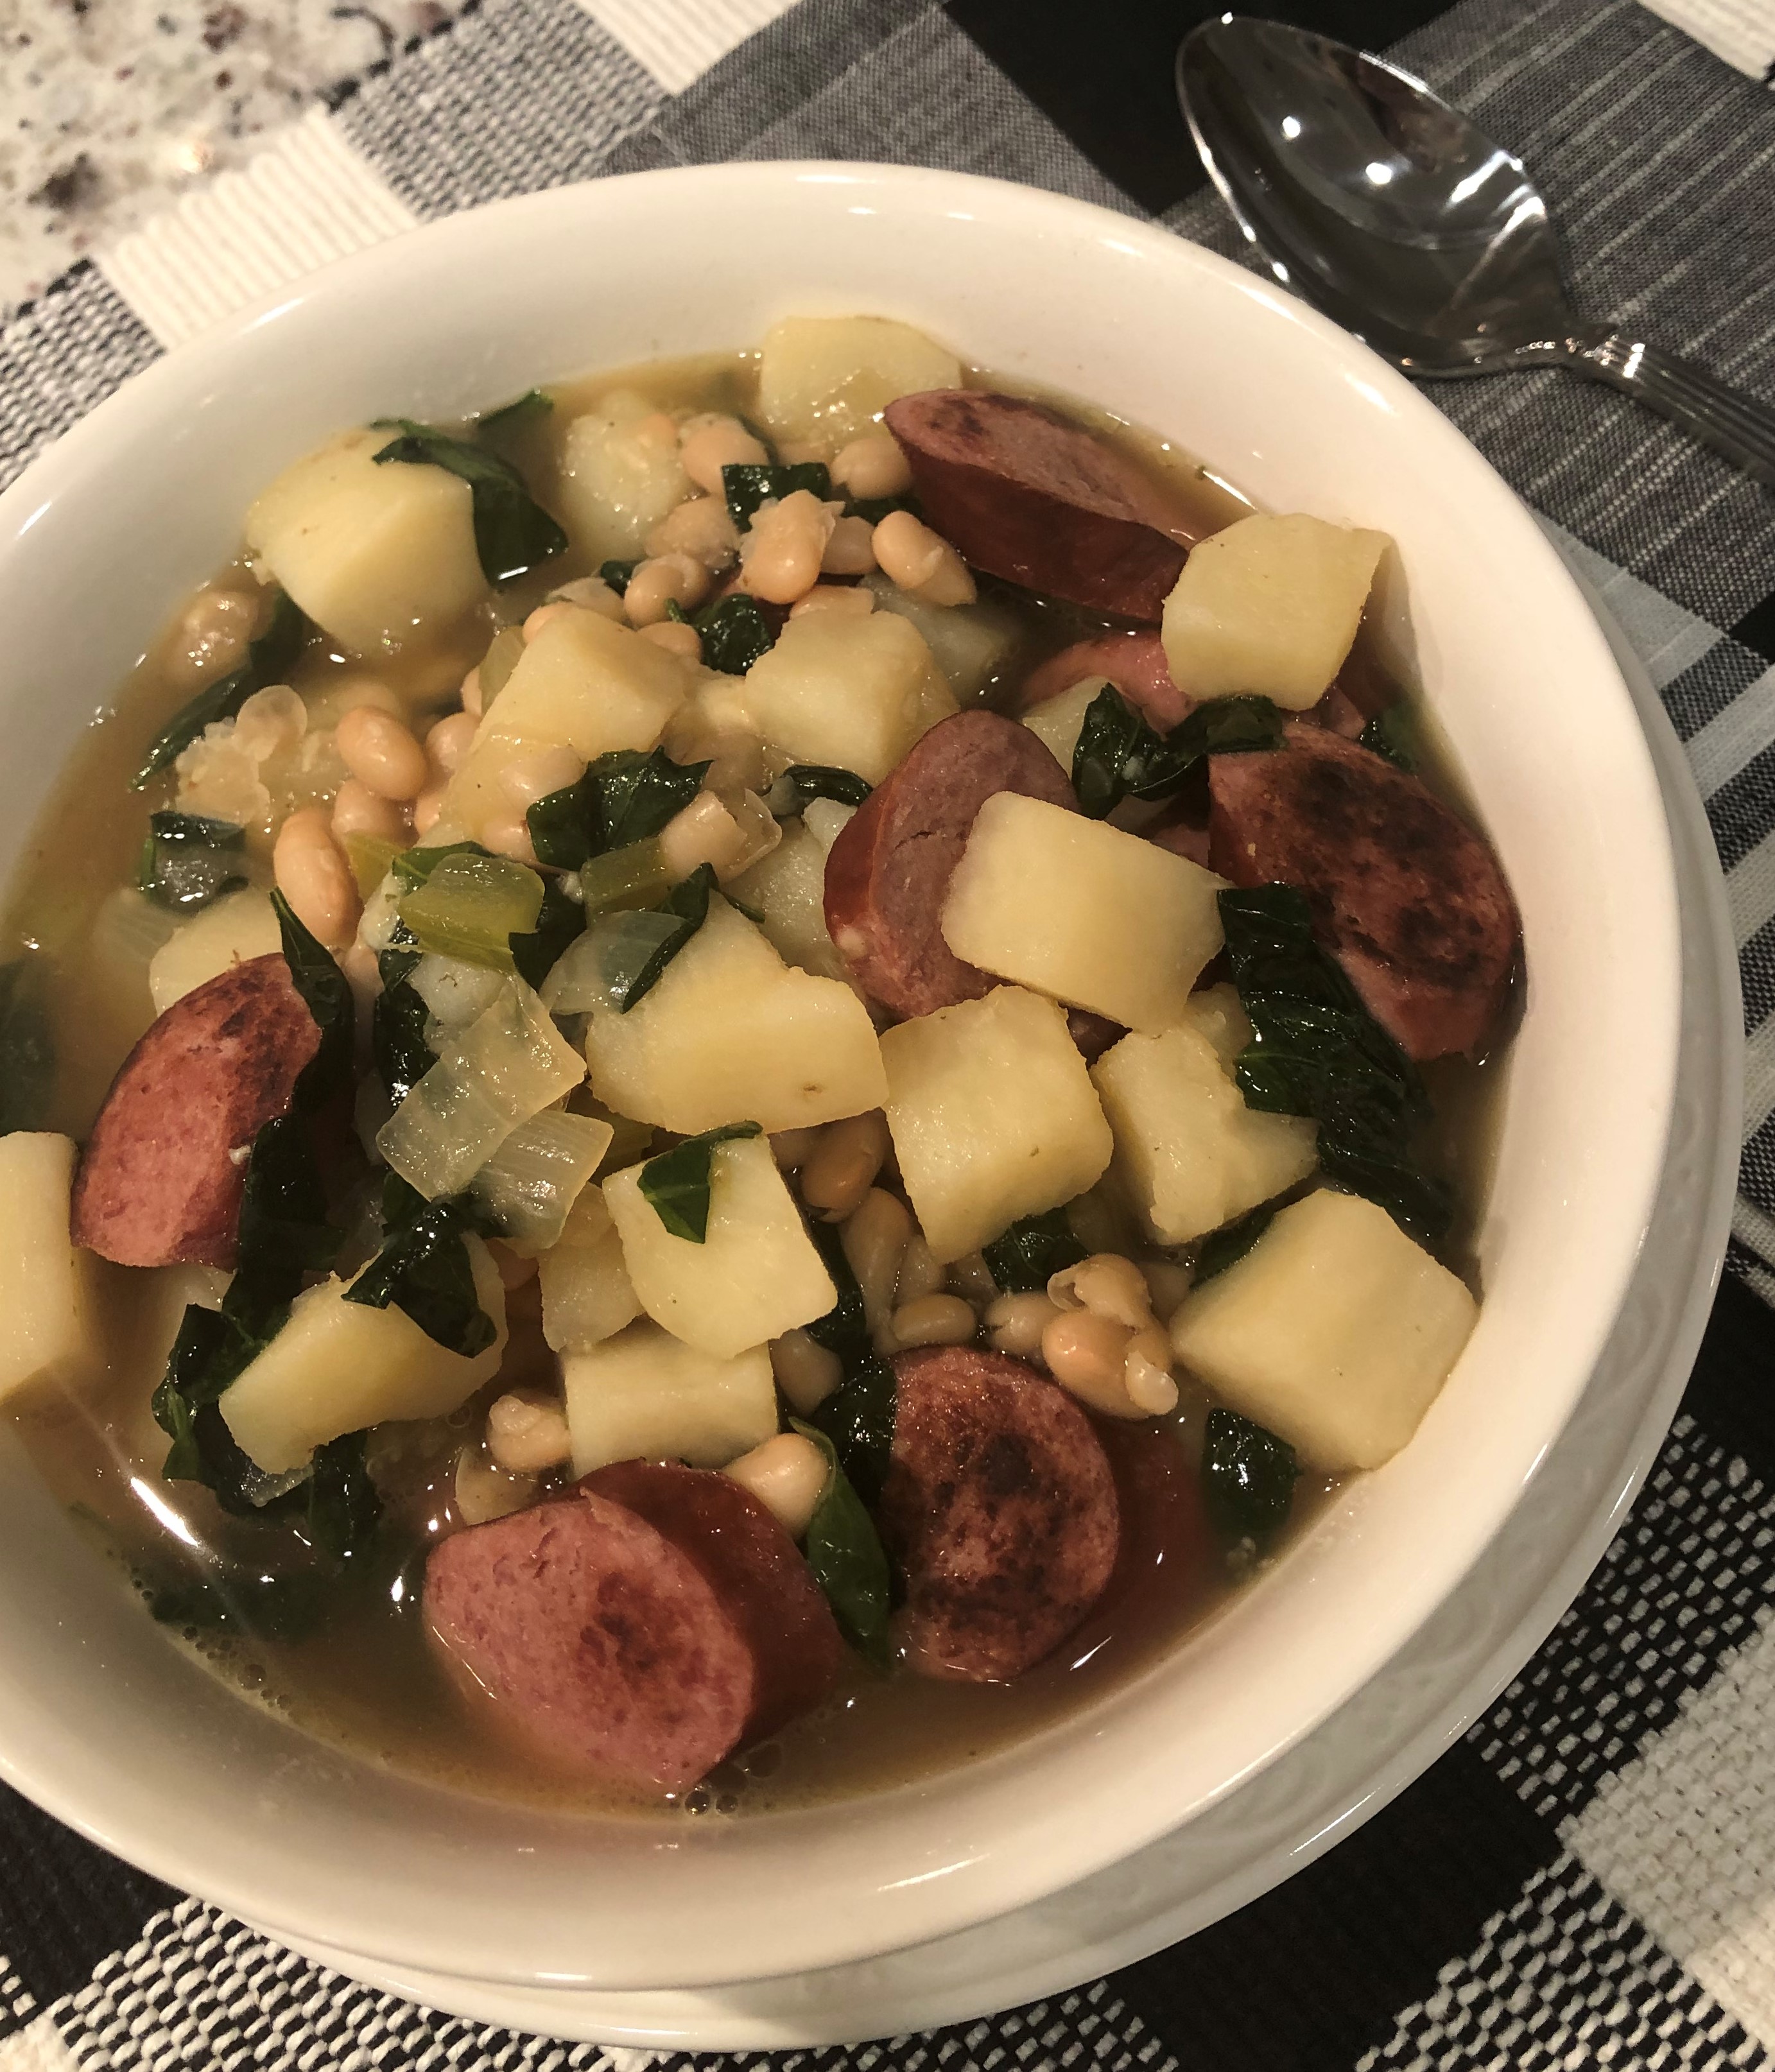 Portuguese Sausage and Kale Soup (Caldo Verde)